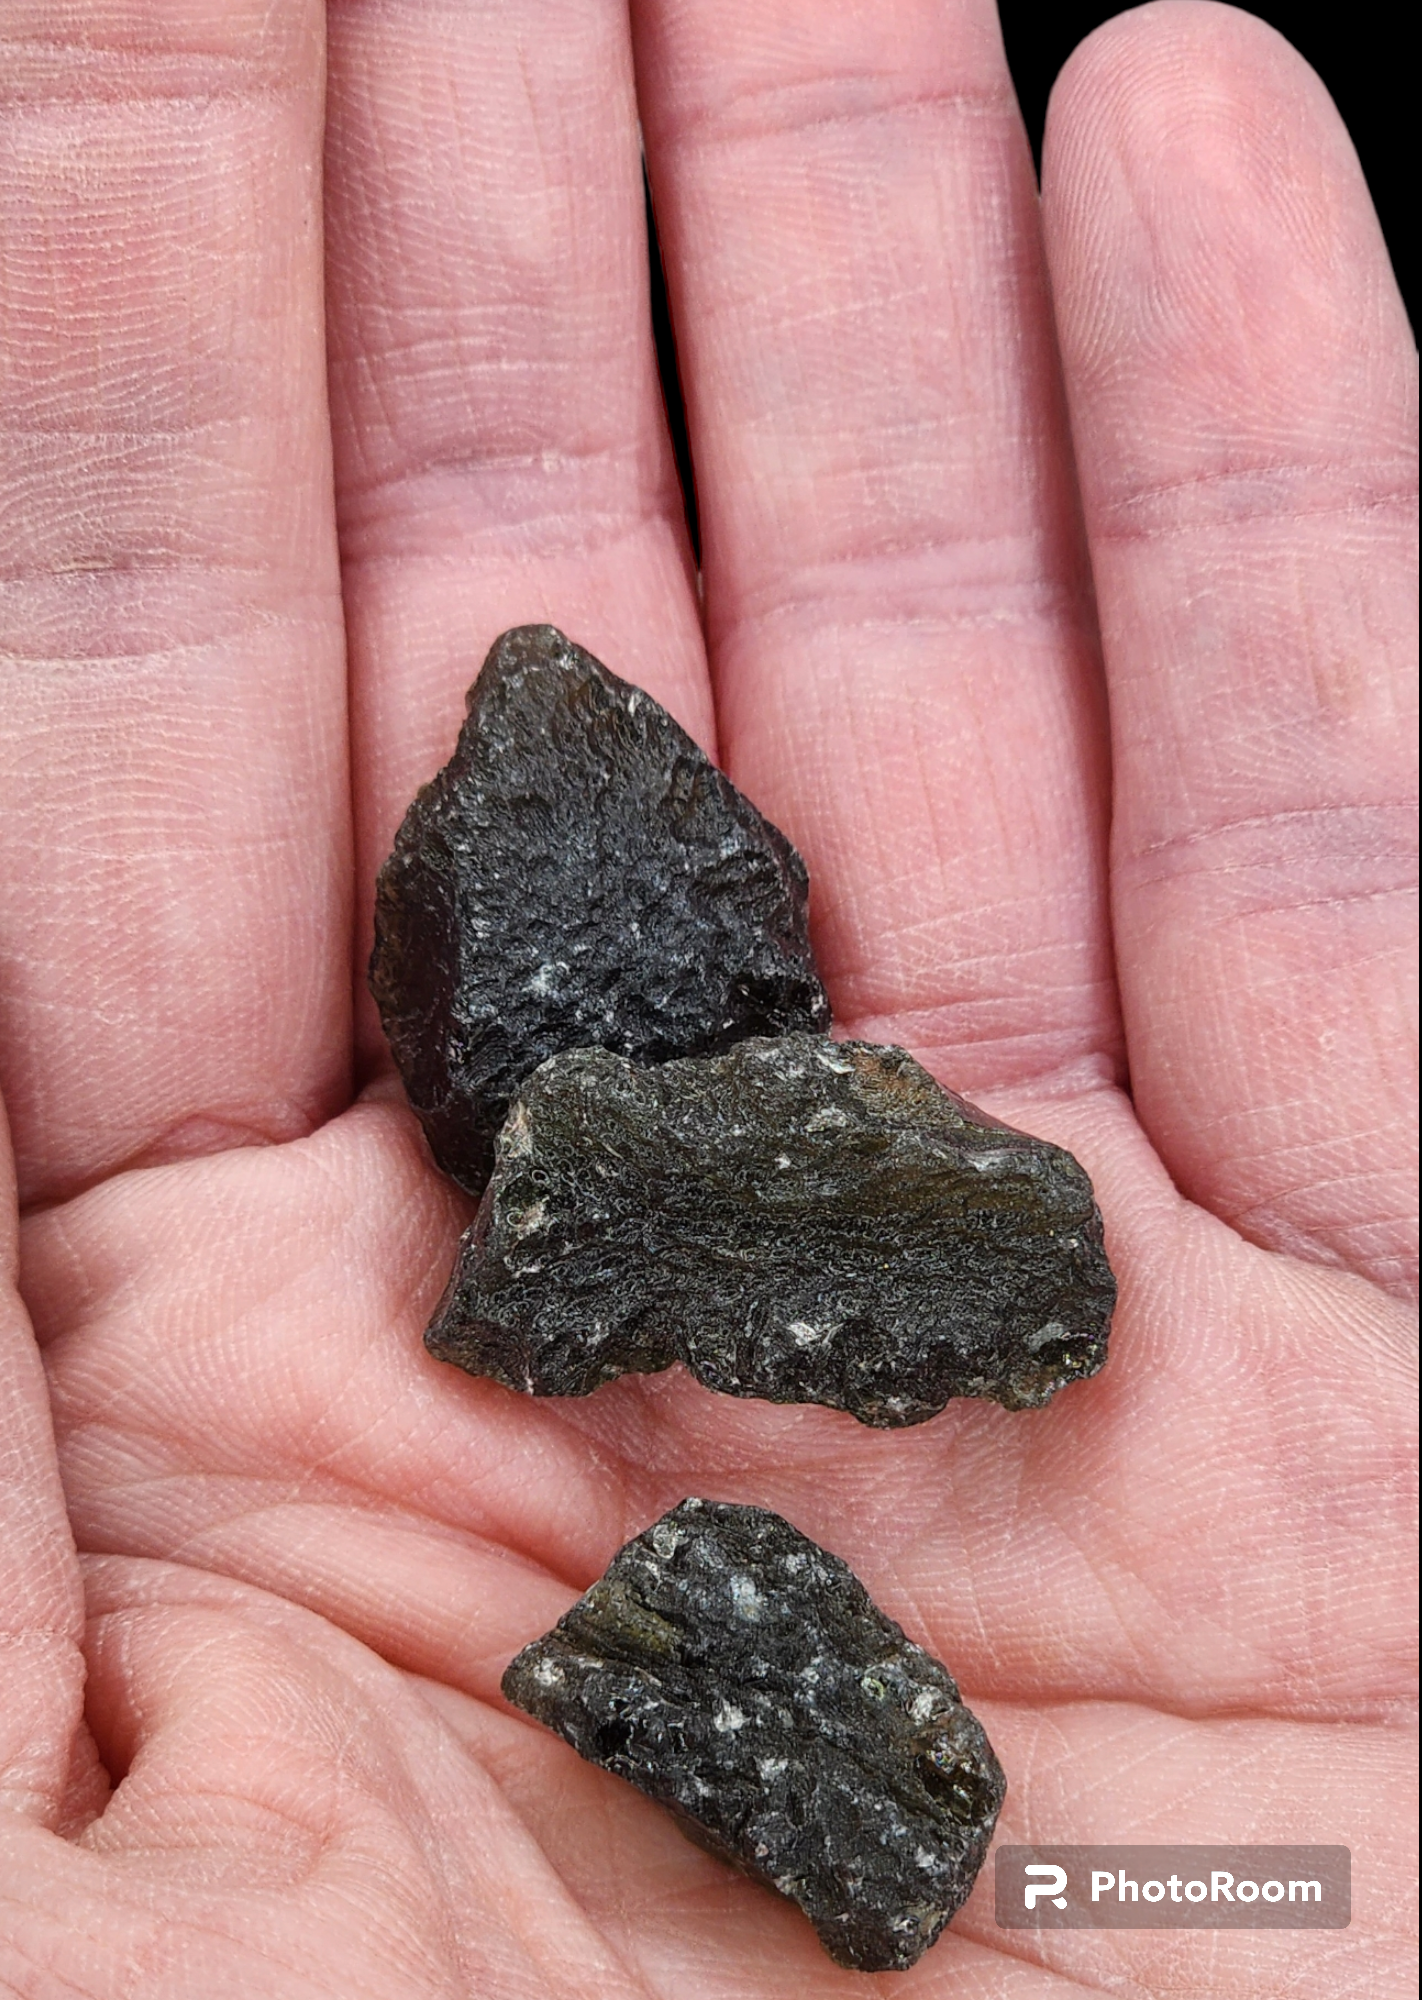 Genuine Moldavite from Czech Republic 10 gram lot- Reiki Infused - Rare Tektite